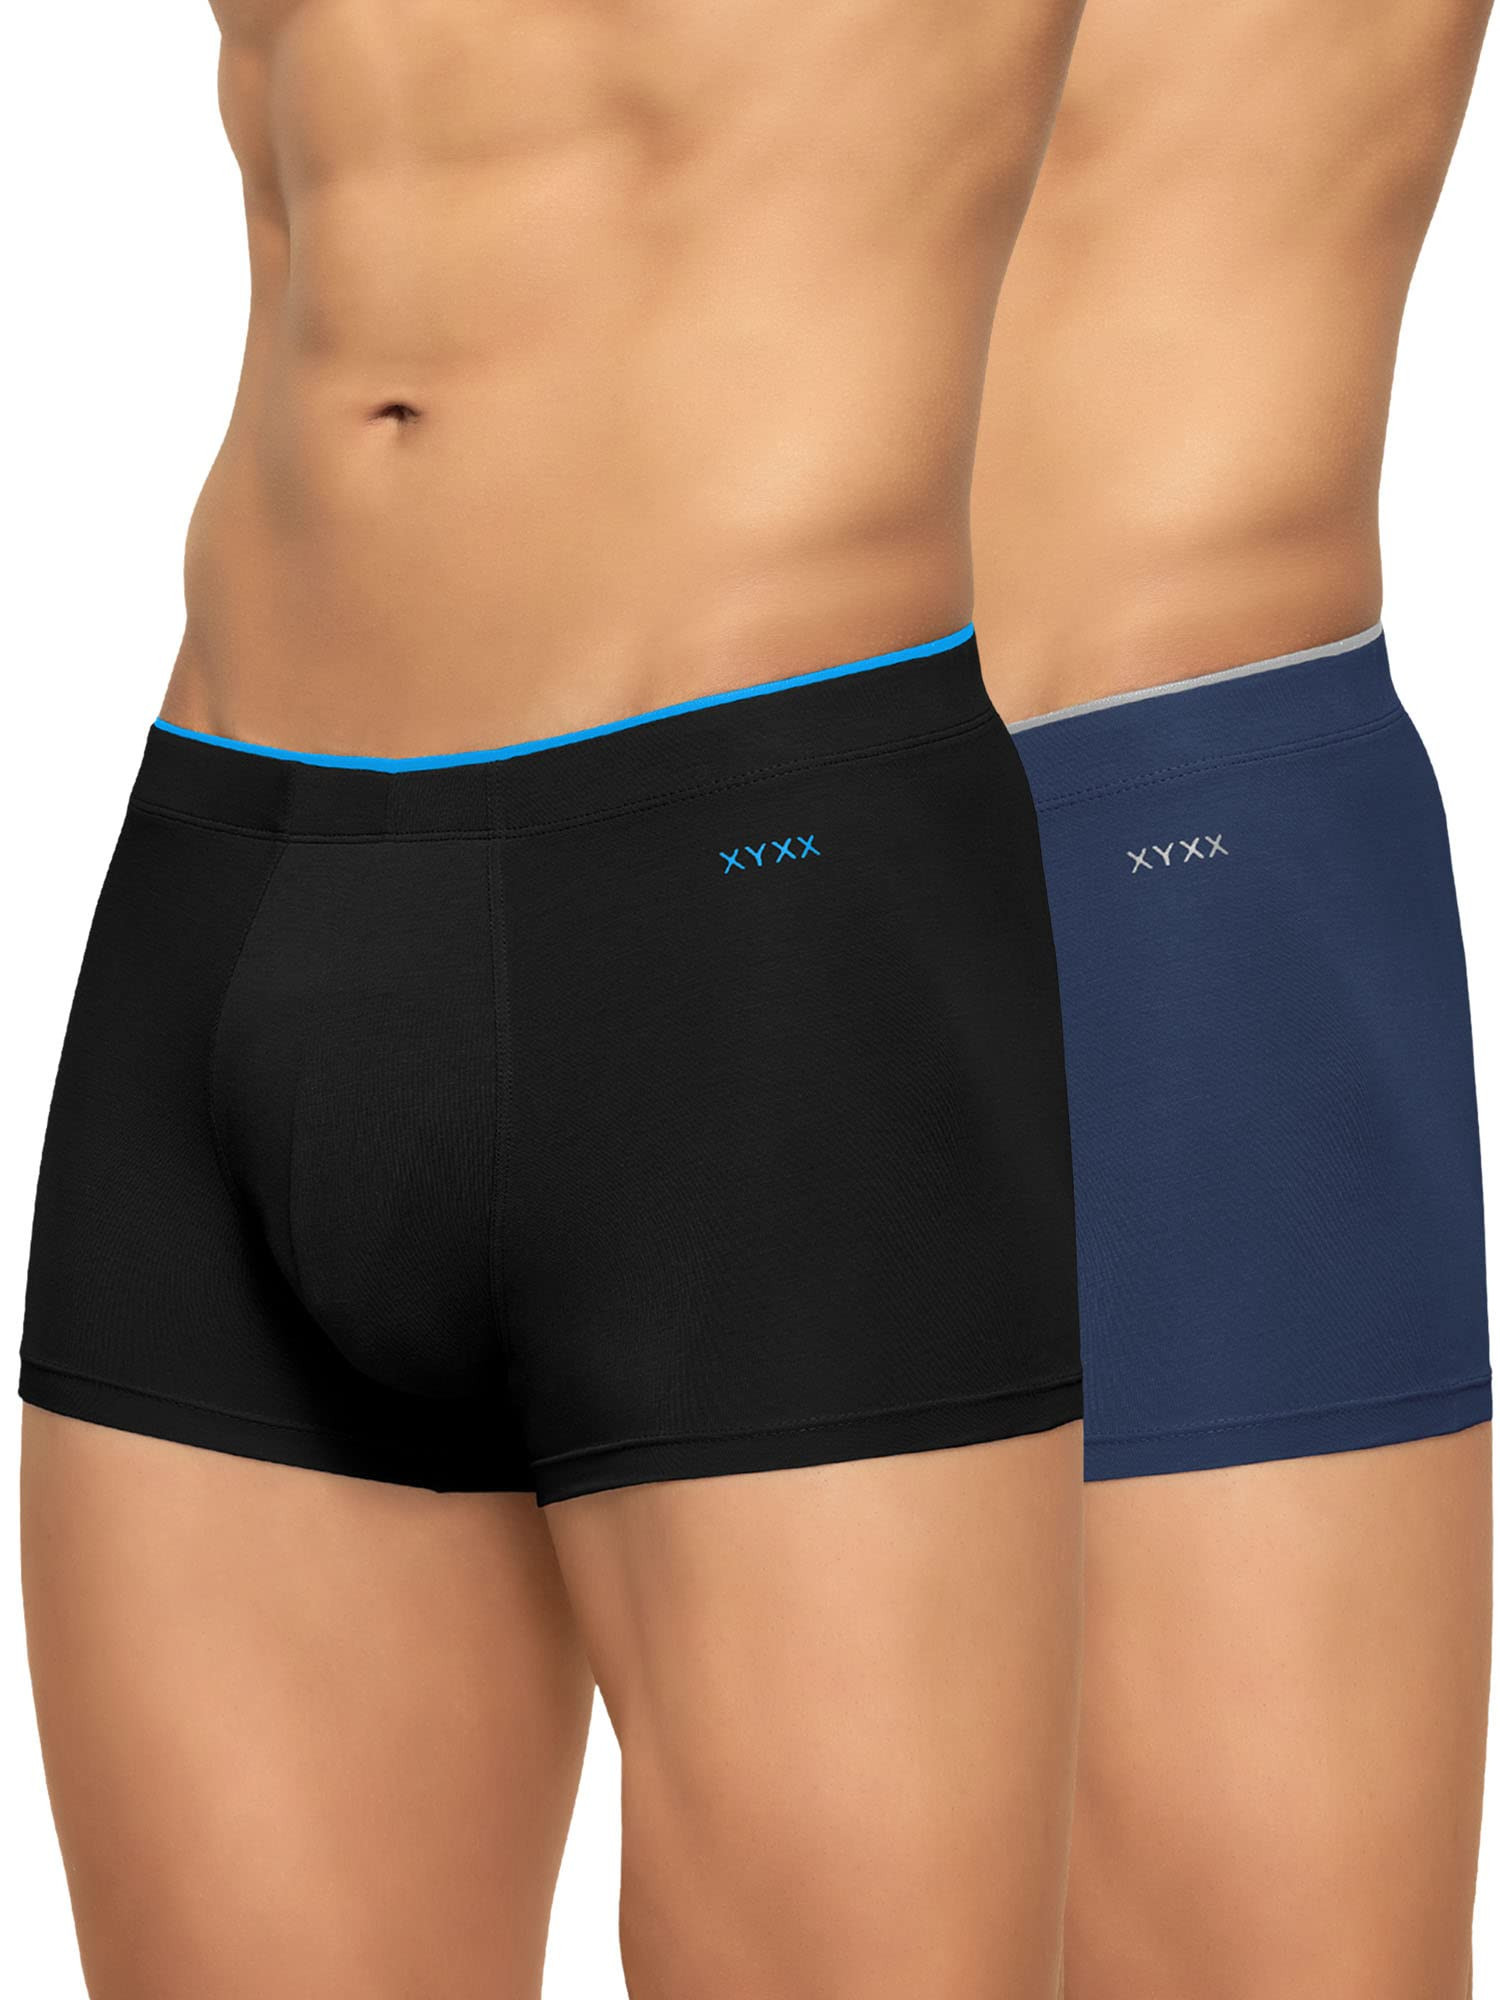 https://www.zebrs.com/uploads/zebrs/products/xyxx-menamp039s-underwear-uno-intellisoft-antimicrobial-micro-modal-trunk-pack-of-2-dress-blue--black-m-17867737418442_l.jpg